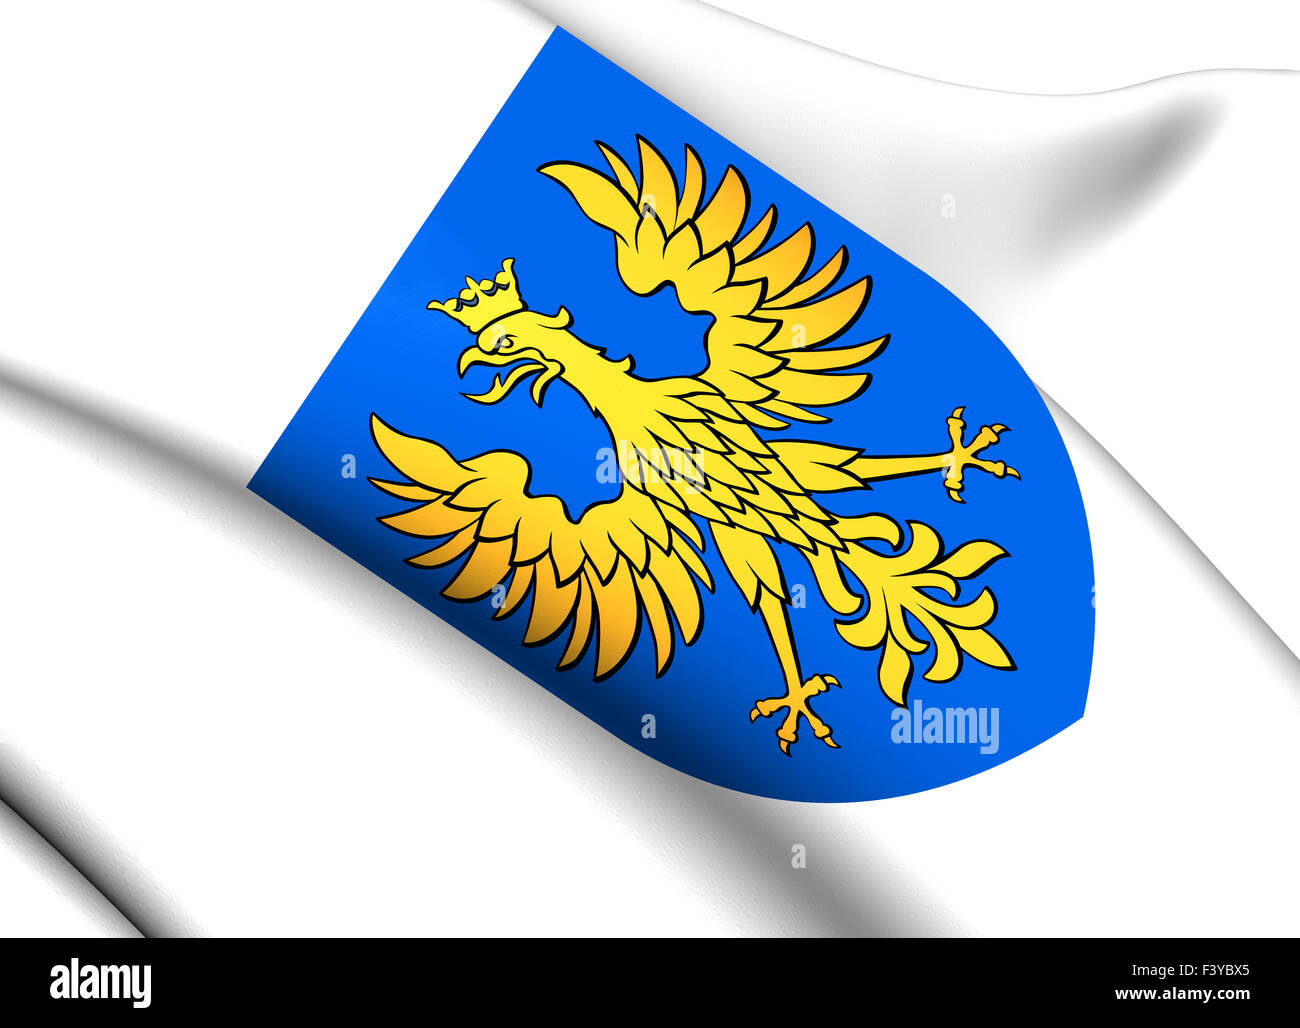 Opole Voivodeship Coat of Arms Stock Photo